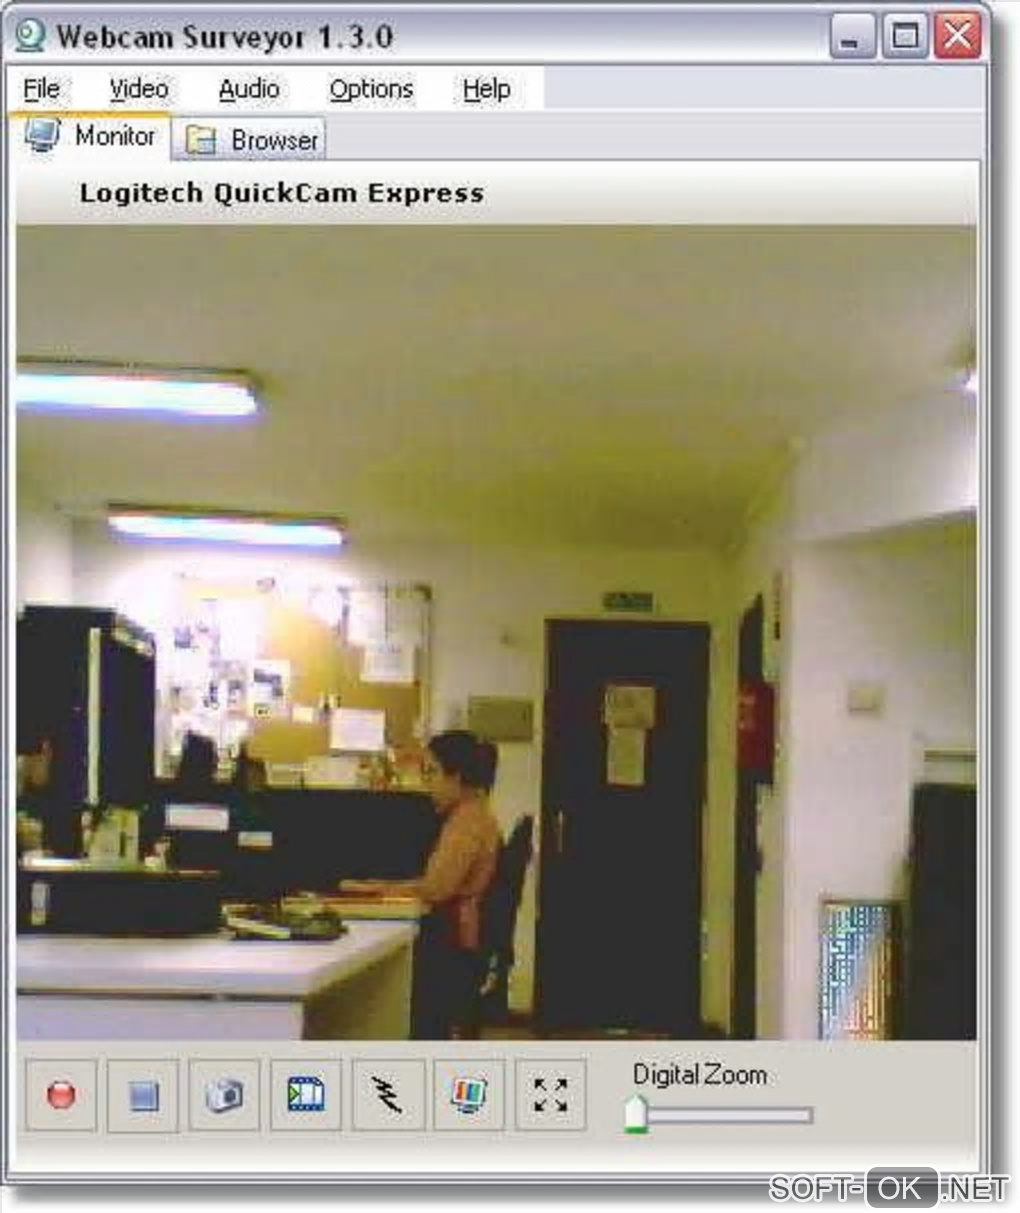 The appearance "Webcam Surveyor"